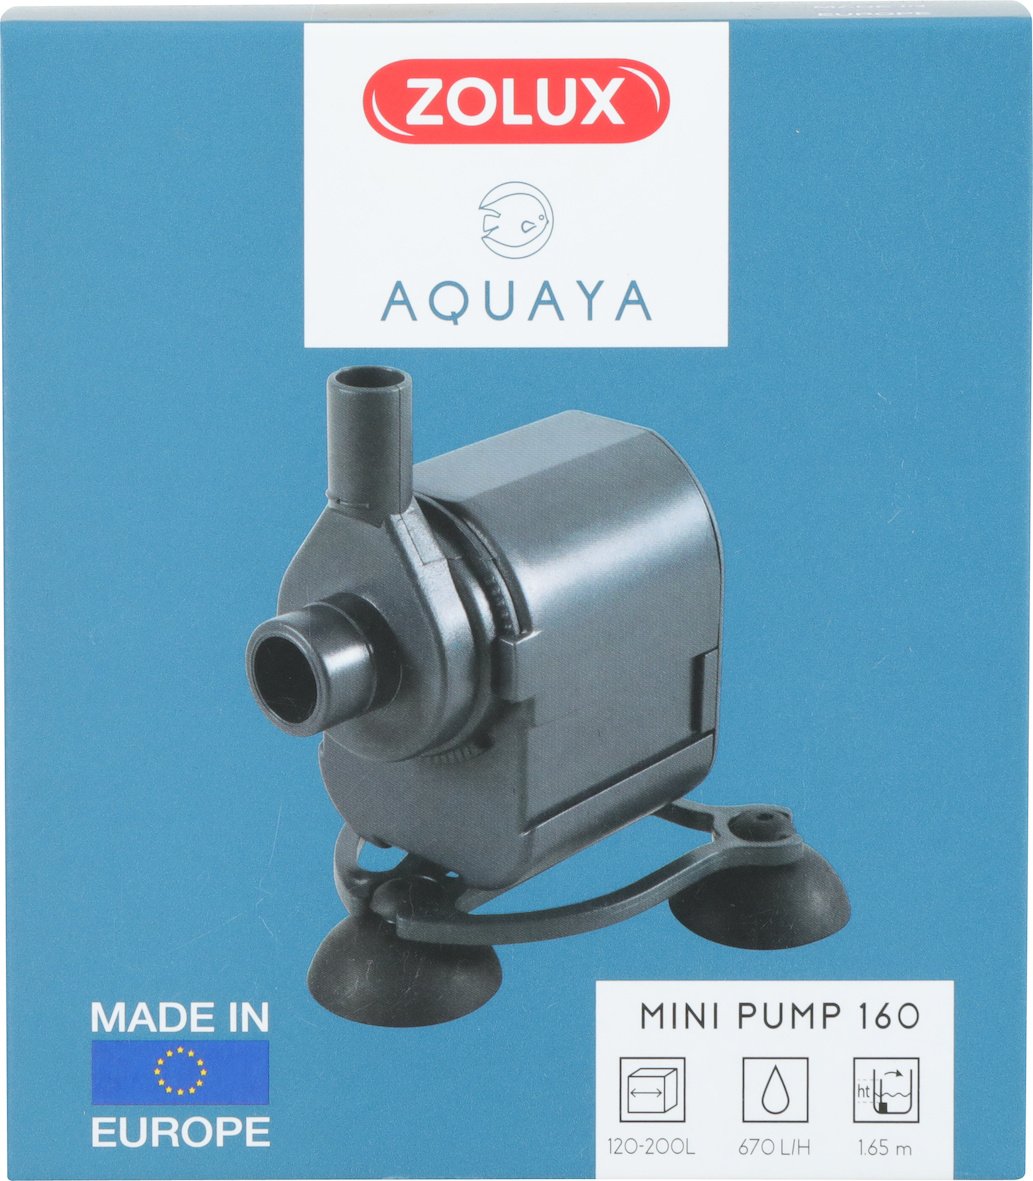 Minipumpe Aquaya 160 – Förderleistung 670 l/h